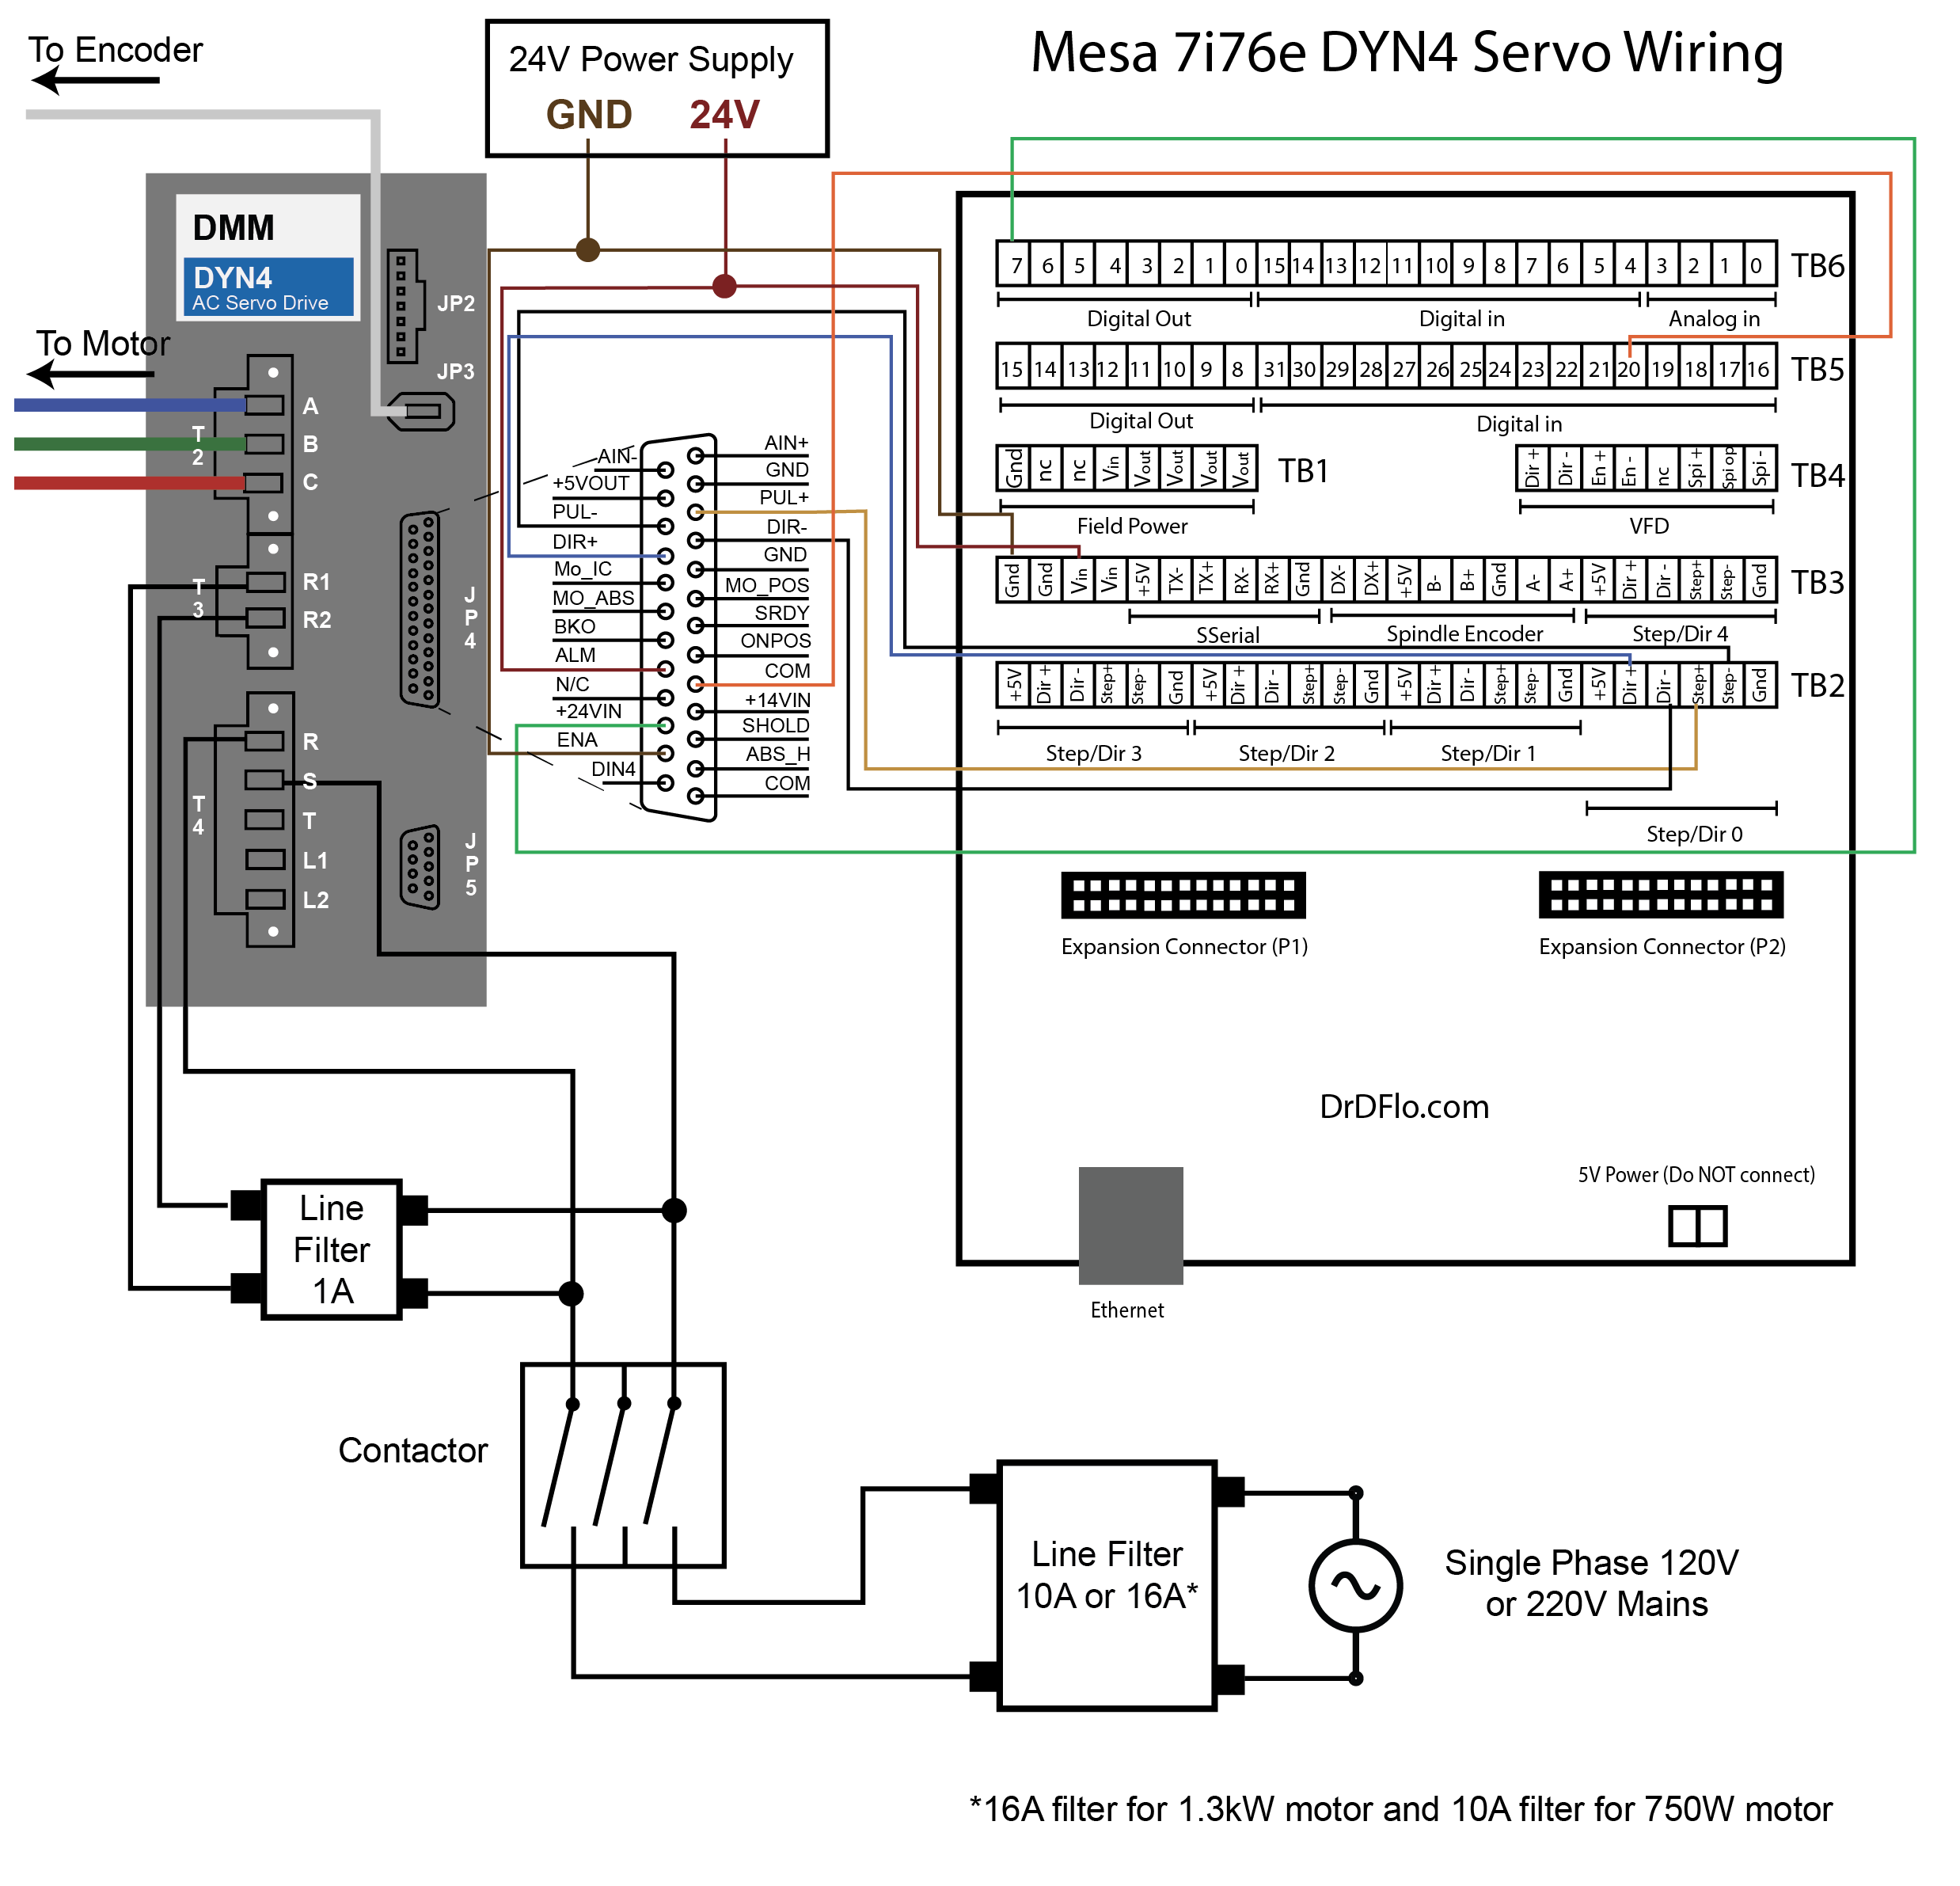 Wiring a sensor (PNP and NPN) to the Mesa 7i76e